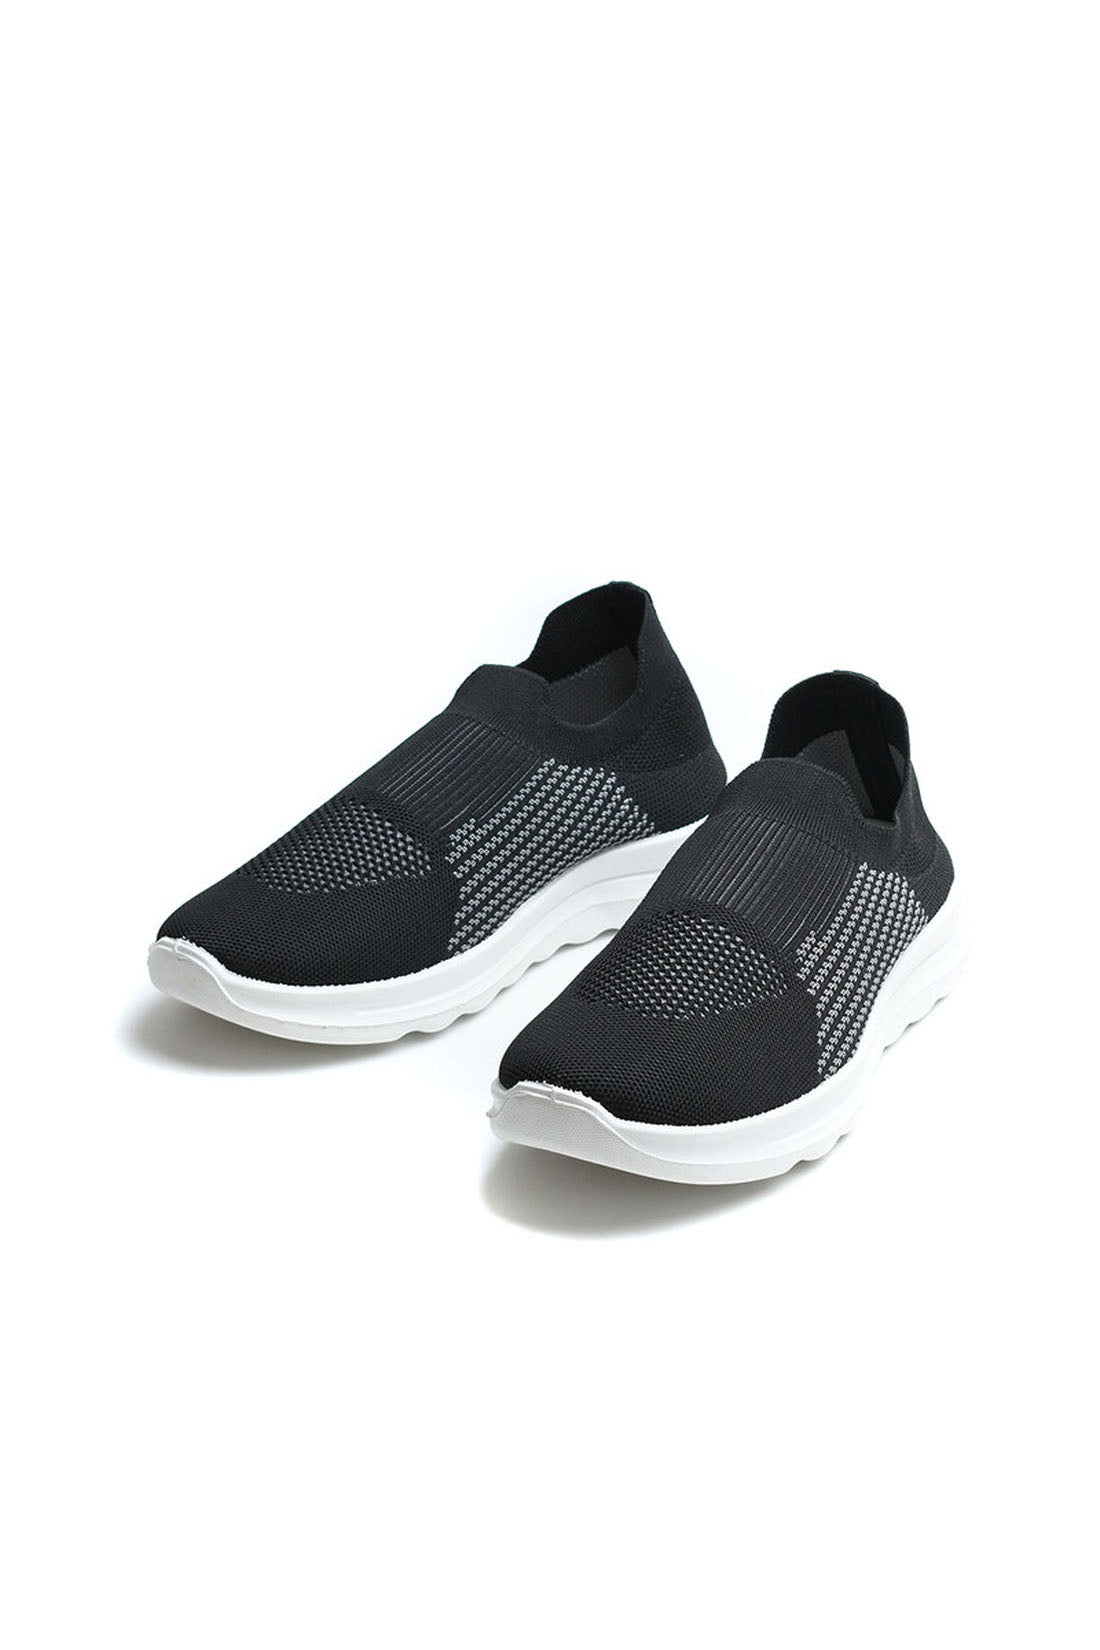 Knit Sneakers - Sportive Canvas Sock - Slip-On - Black & White